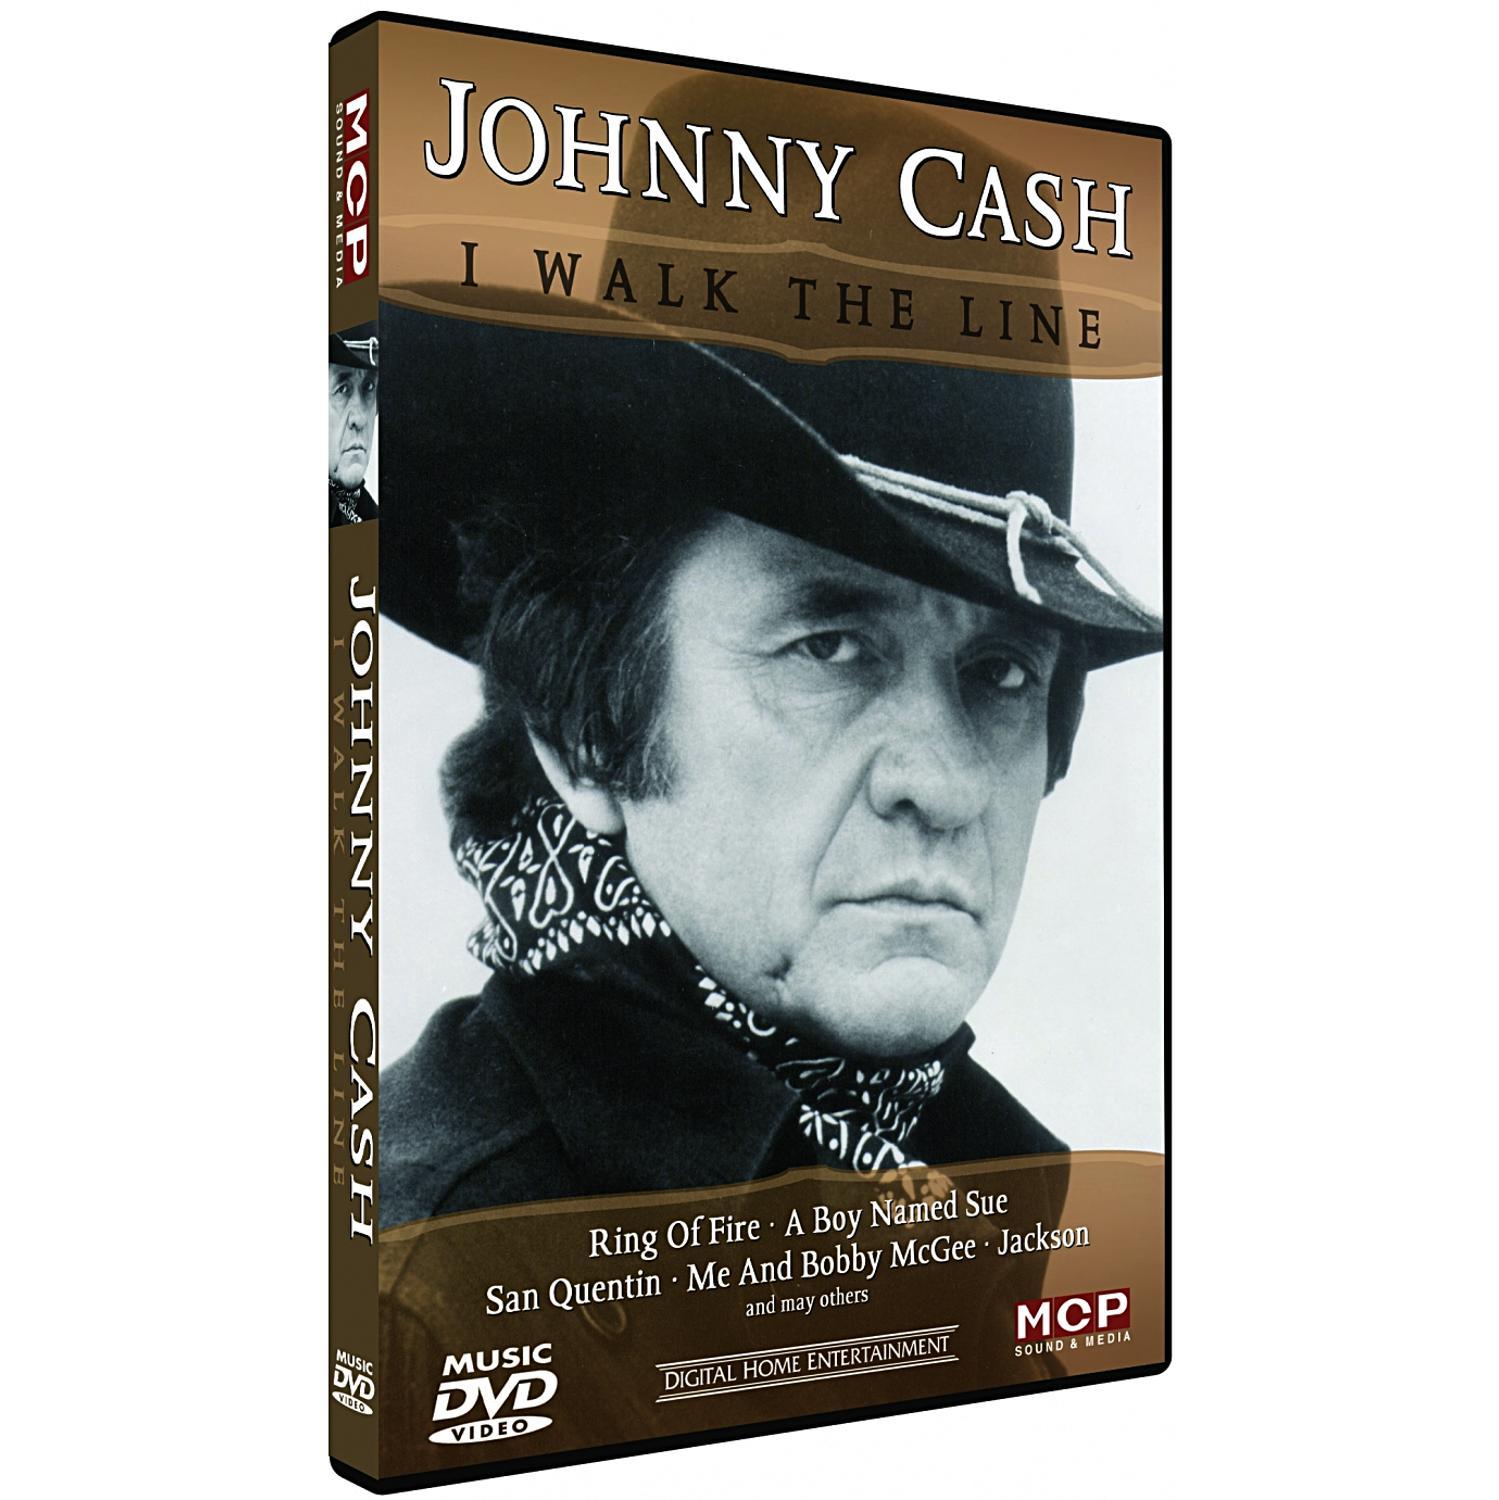 Line Johnny - - Walk Cash (DVD) The I